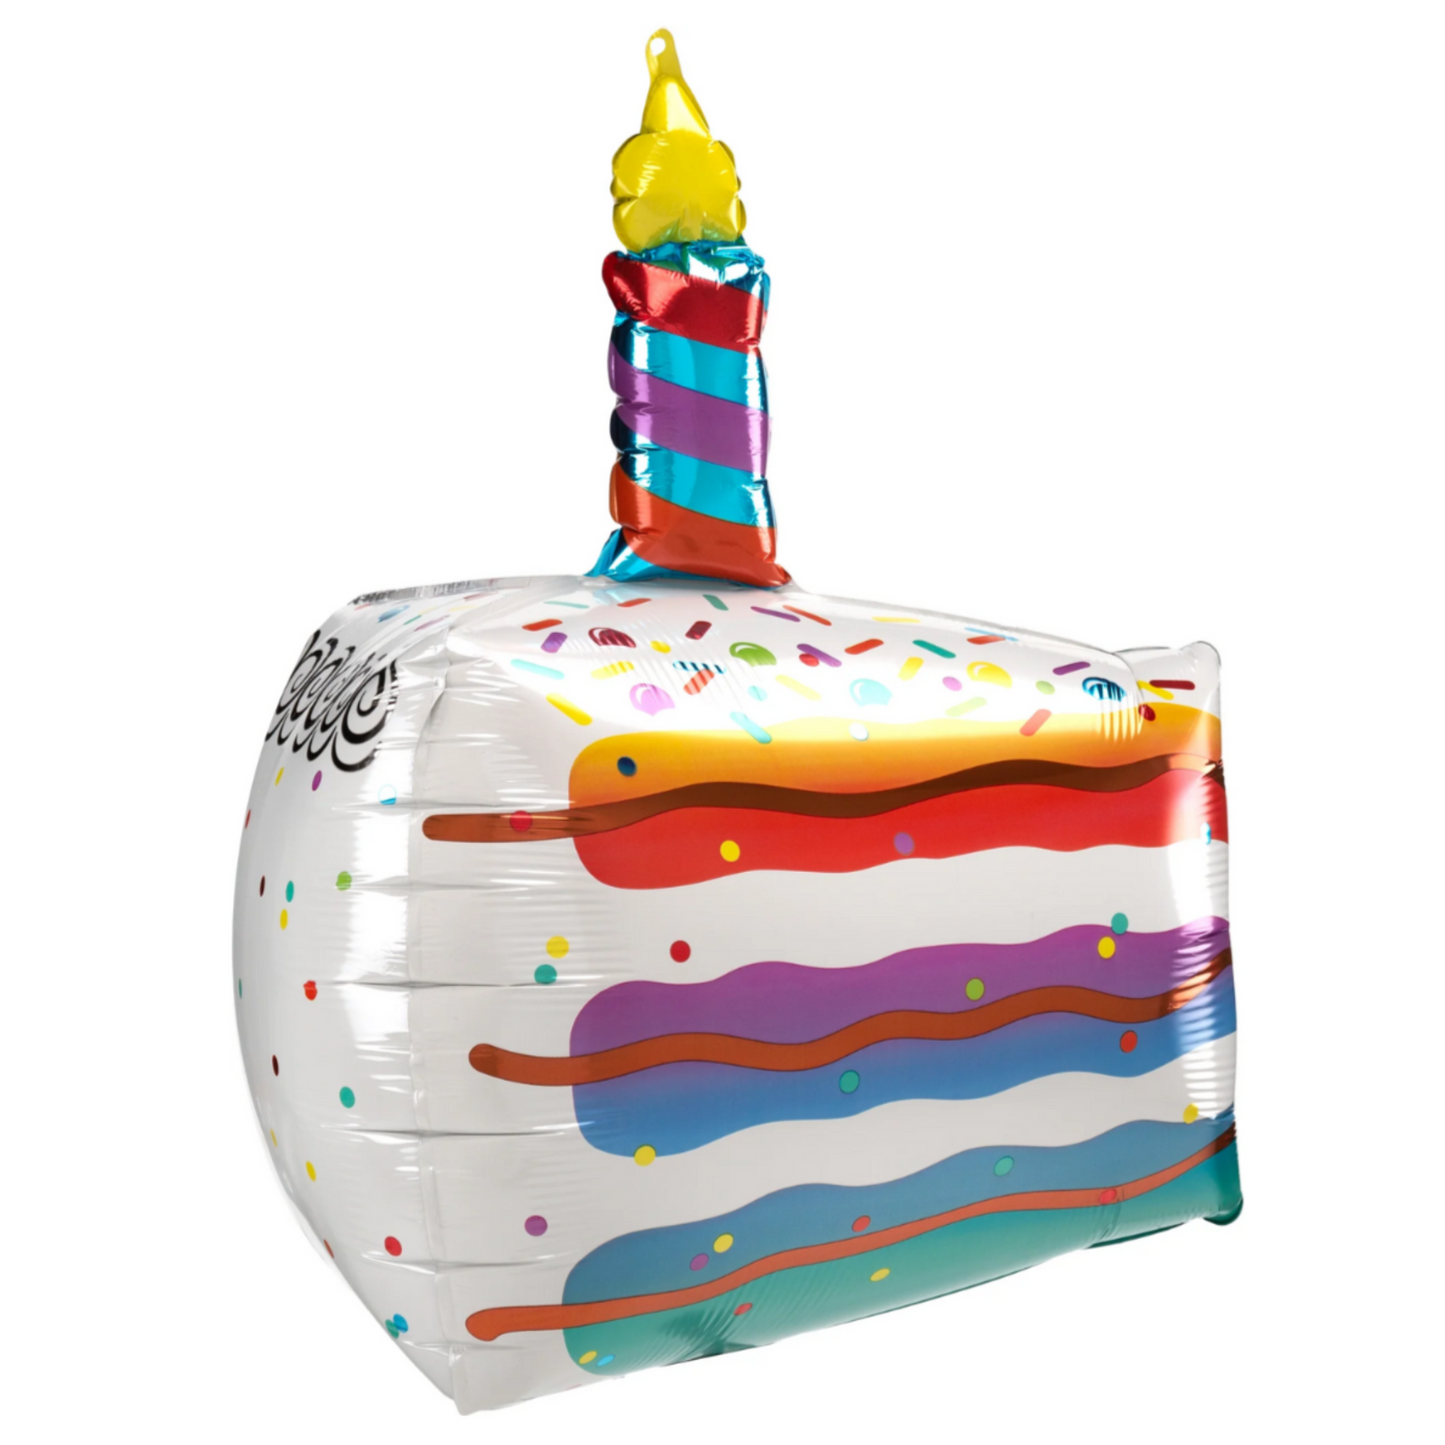 Cake Slice Balloon